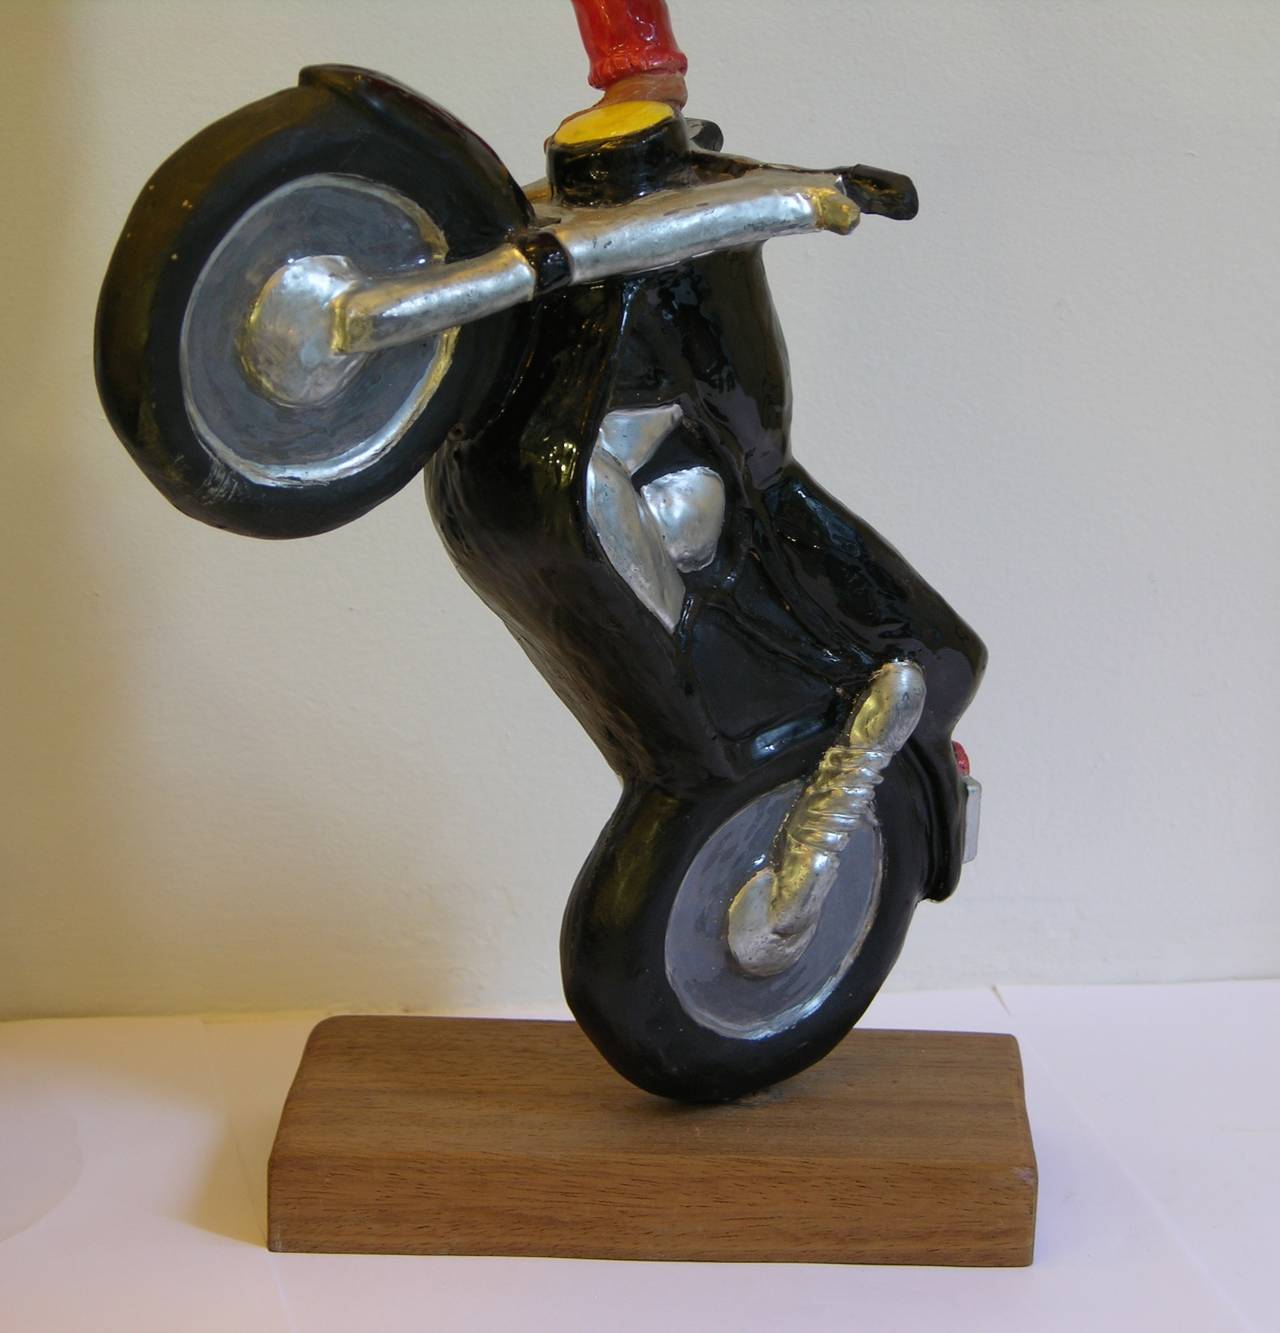 Figure on Motorcycle, Terra Cotta Sculpture by the Italian Artist Ginestroni 2